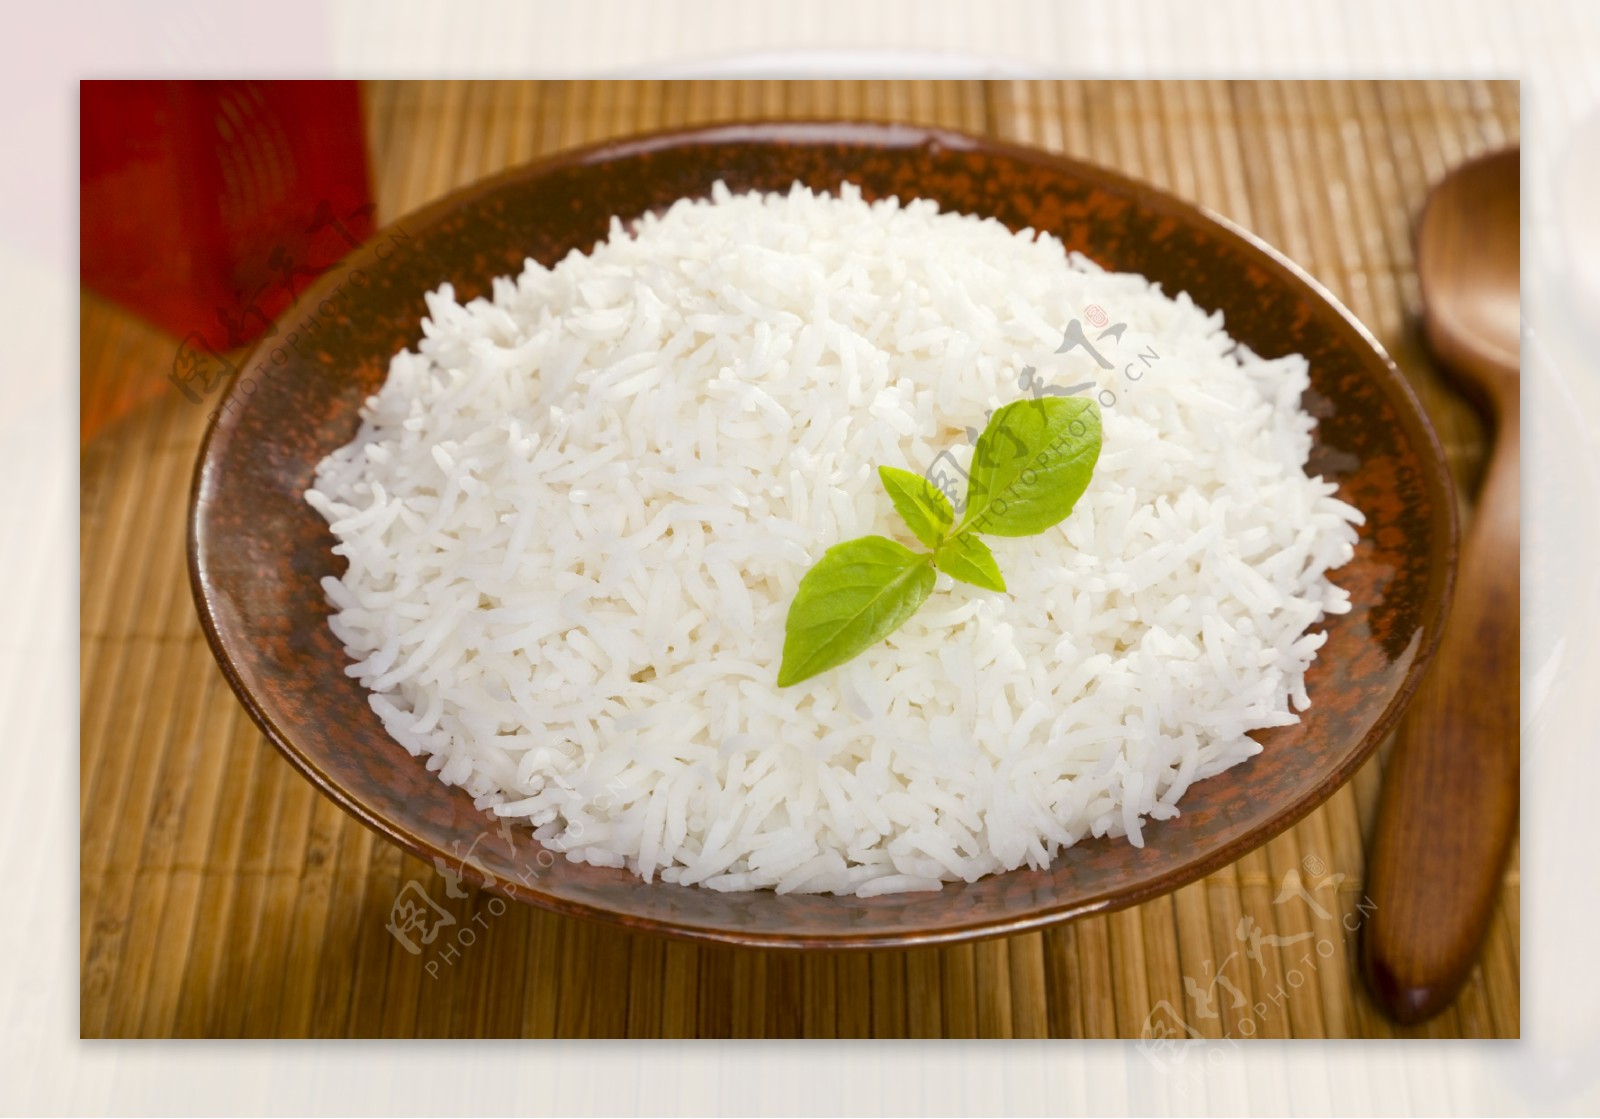 100g煮熟的米饭到底有多少？ - 知乎